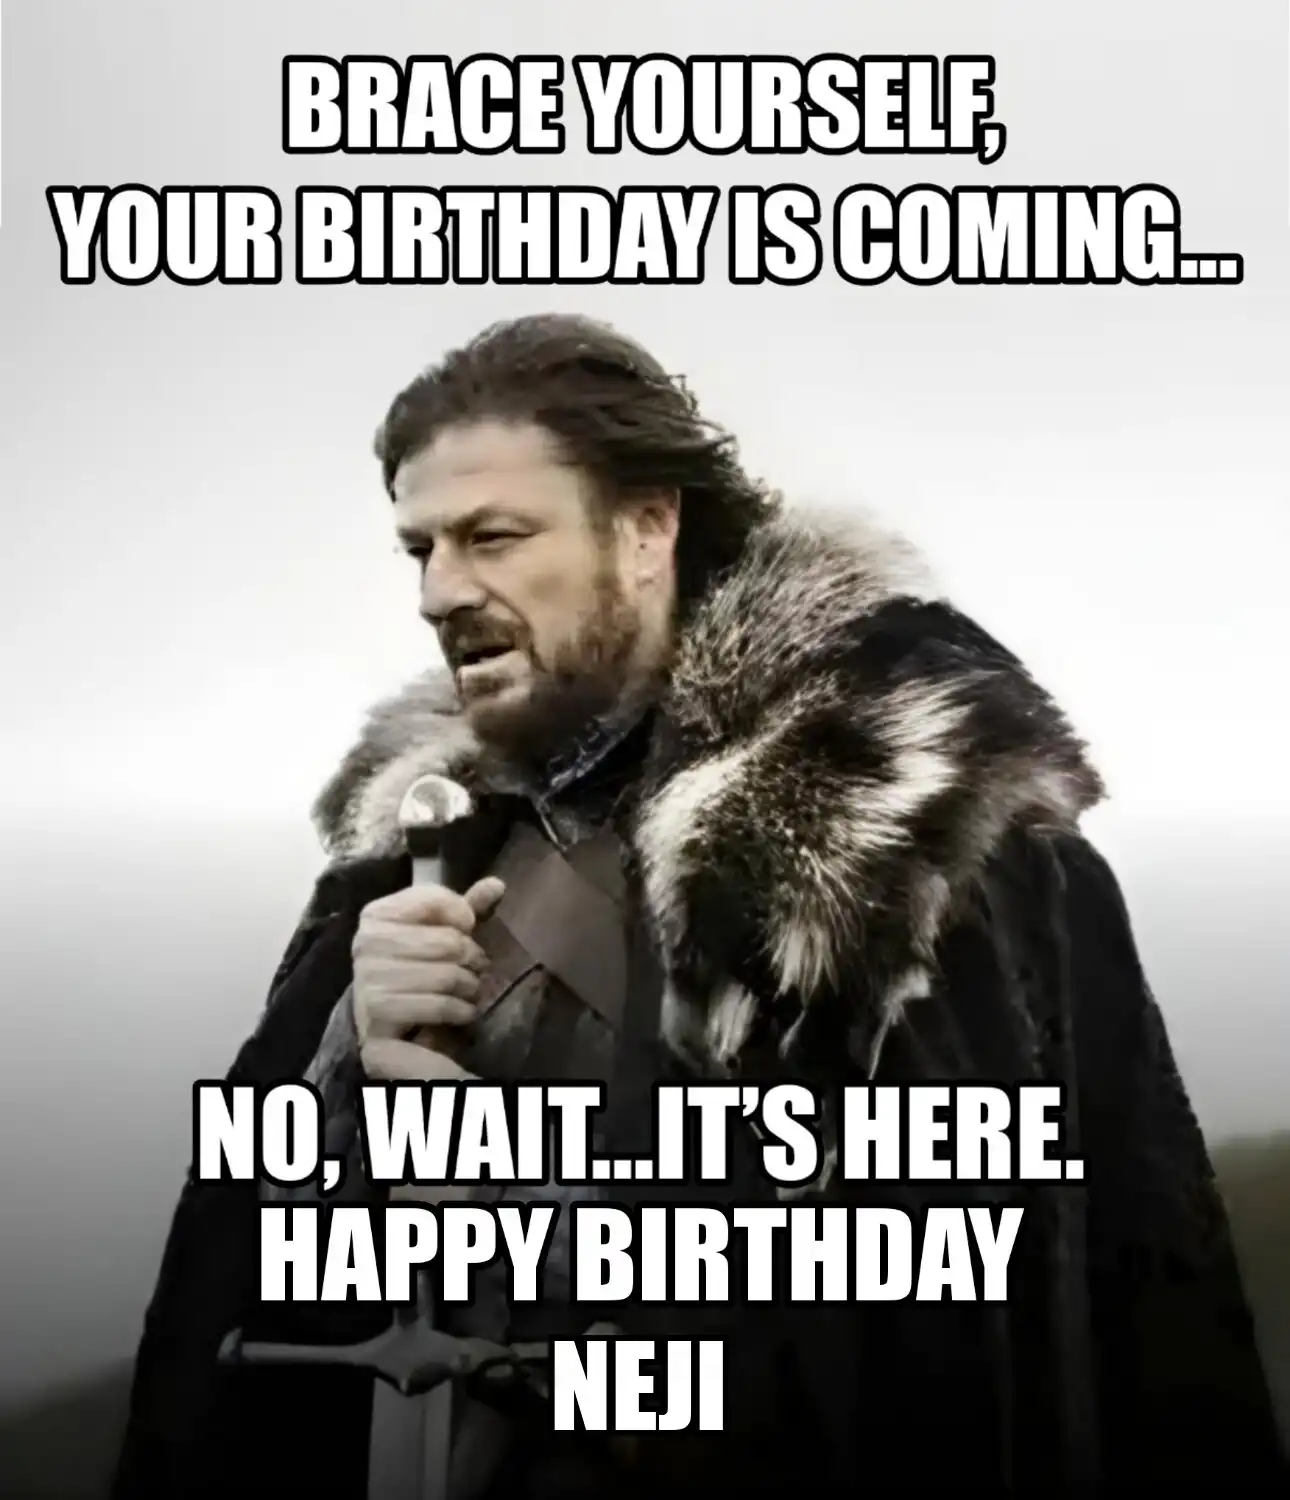 Happy Birthday Neji Brace Yourself Your Birthday Is Coming Meme